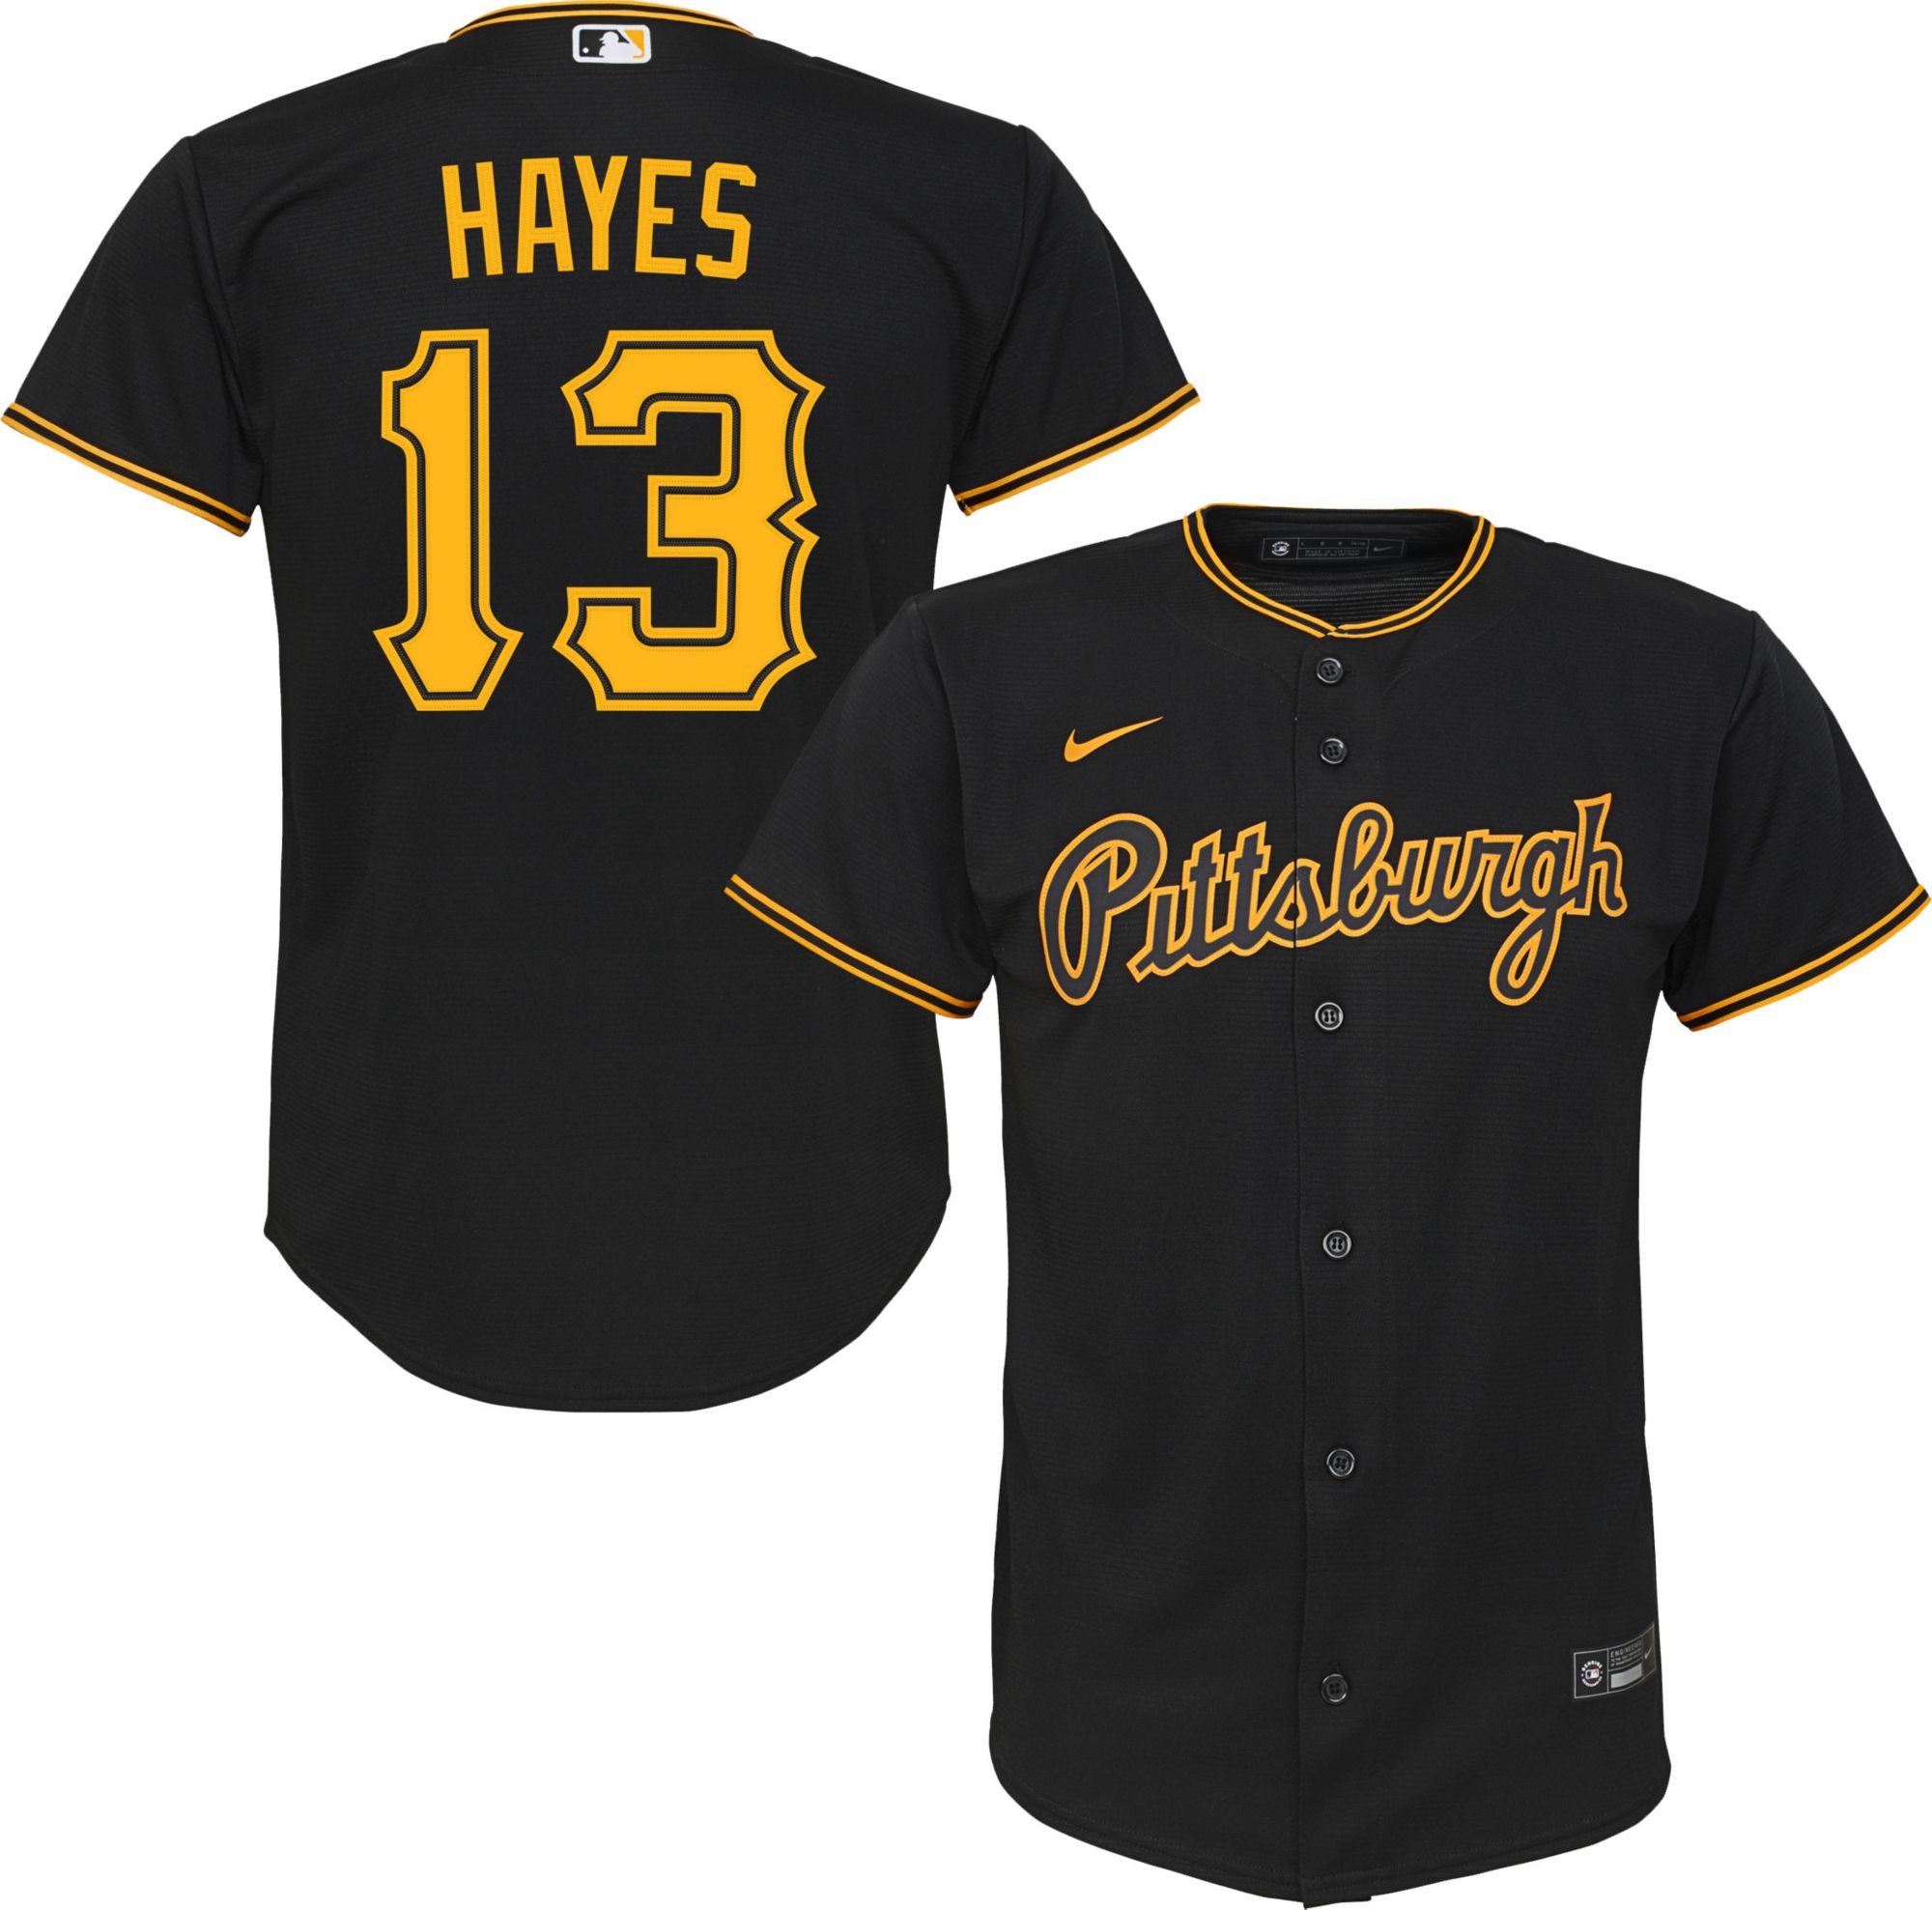 Nike / Youth Pittsburgh Pirates Ke'Bryan Hayes #13 White Replica Jersey